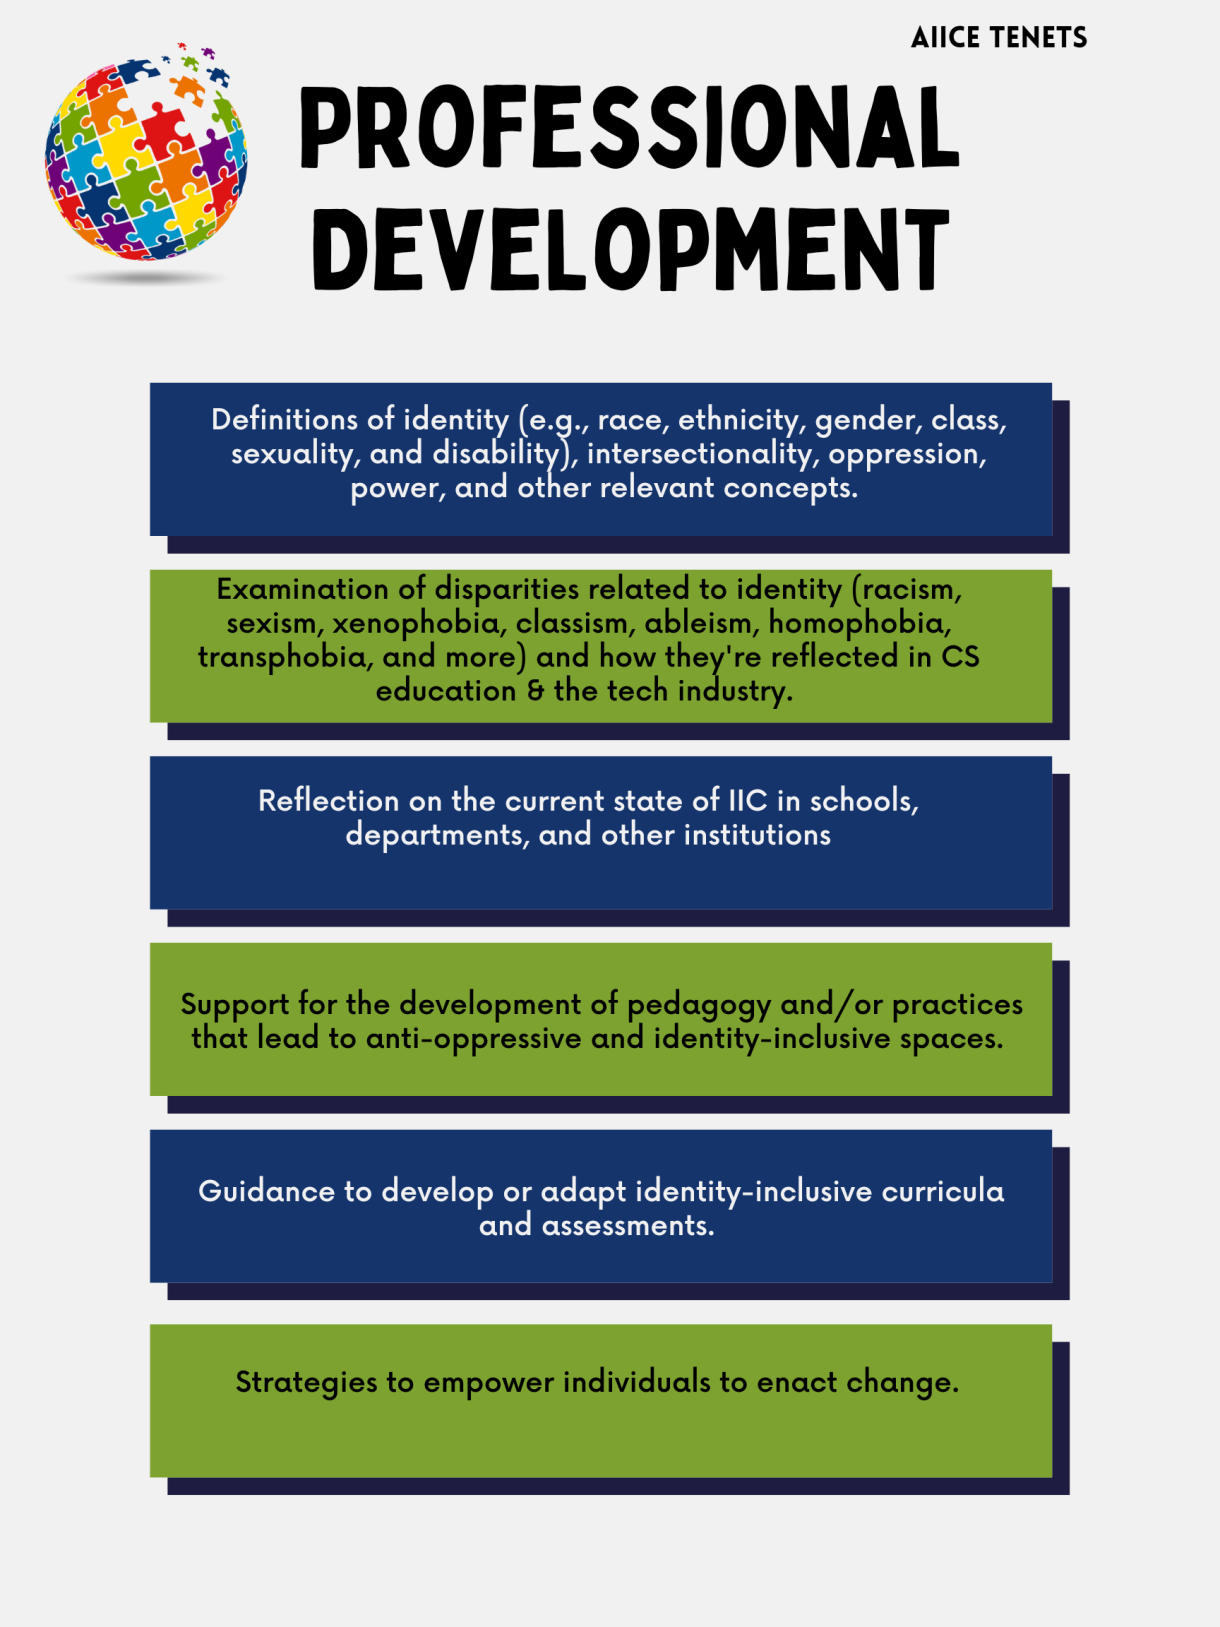 AiiCE Professional Development Tenets